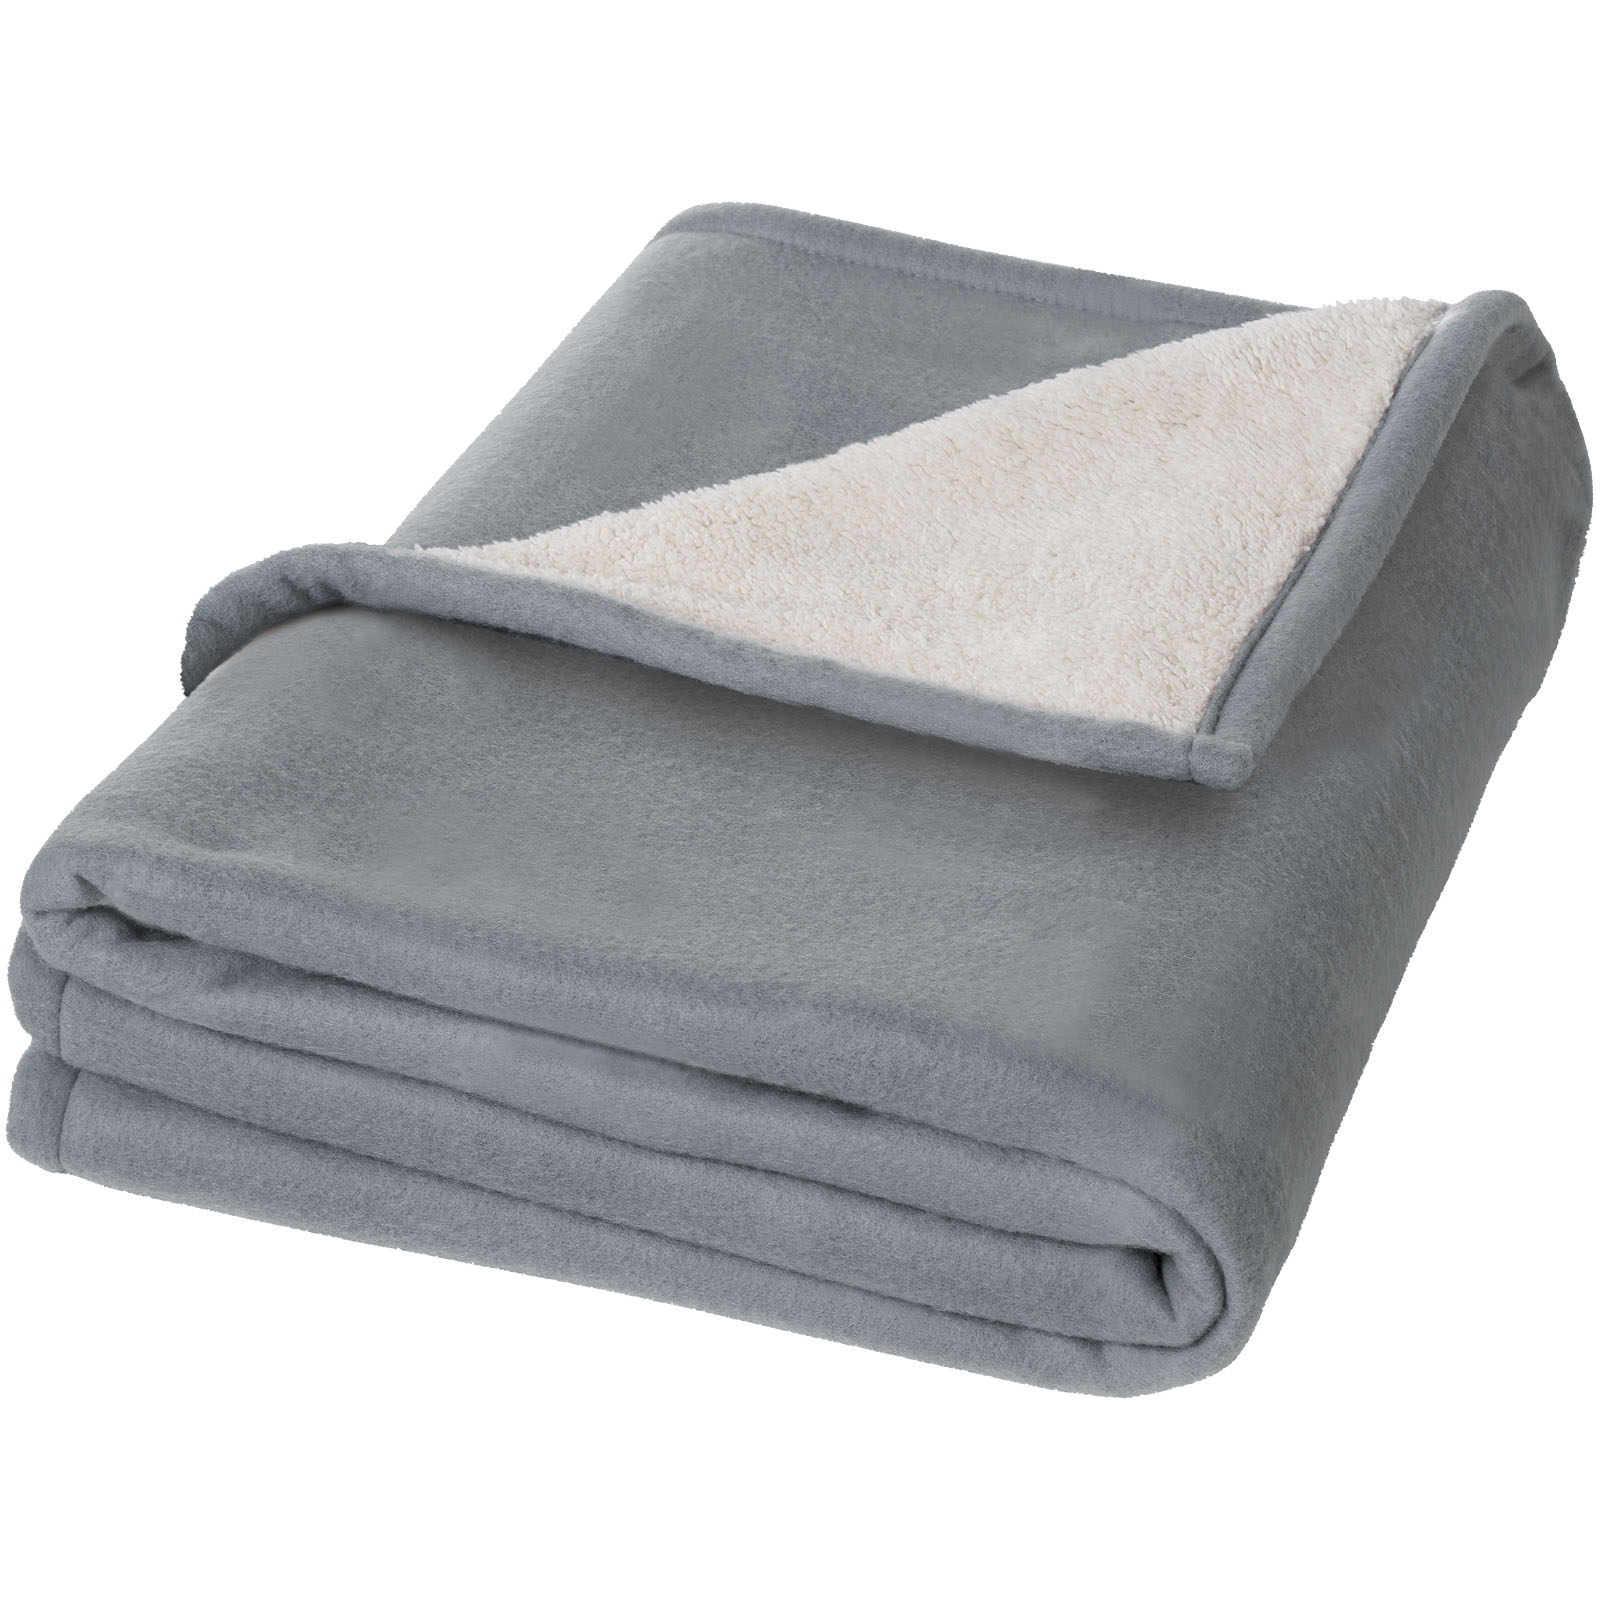 Advertising Blankets - Springwood soft fleece and sherpa plaid blanket - 0